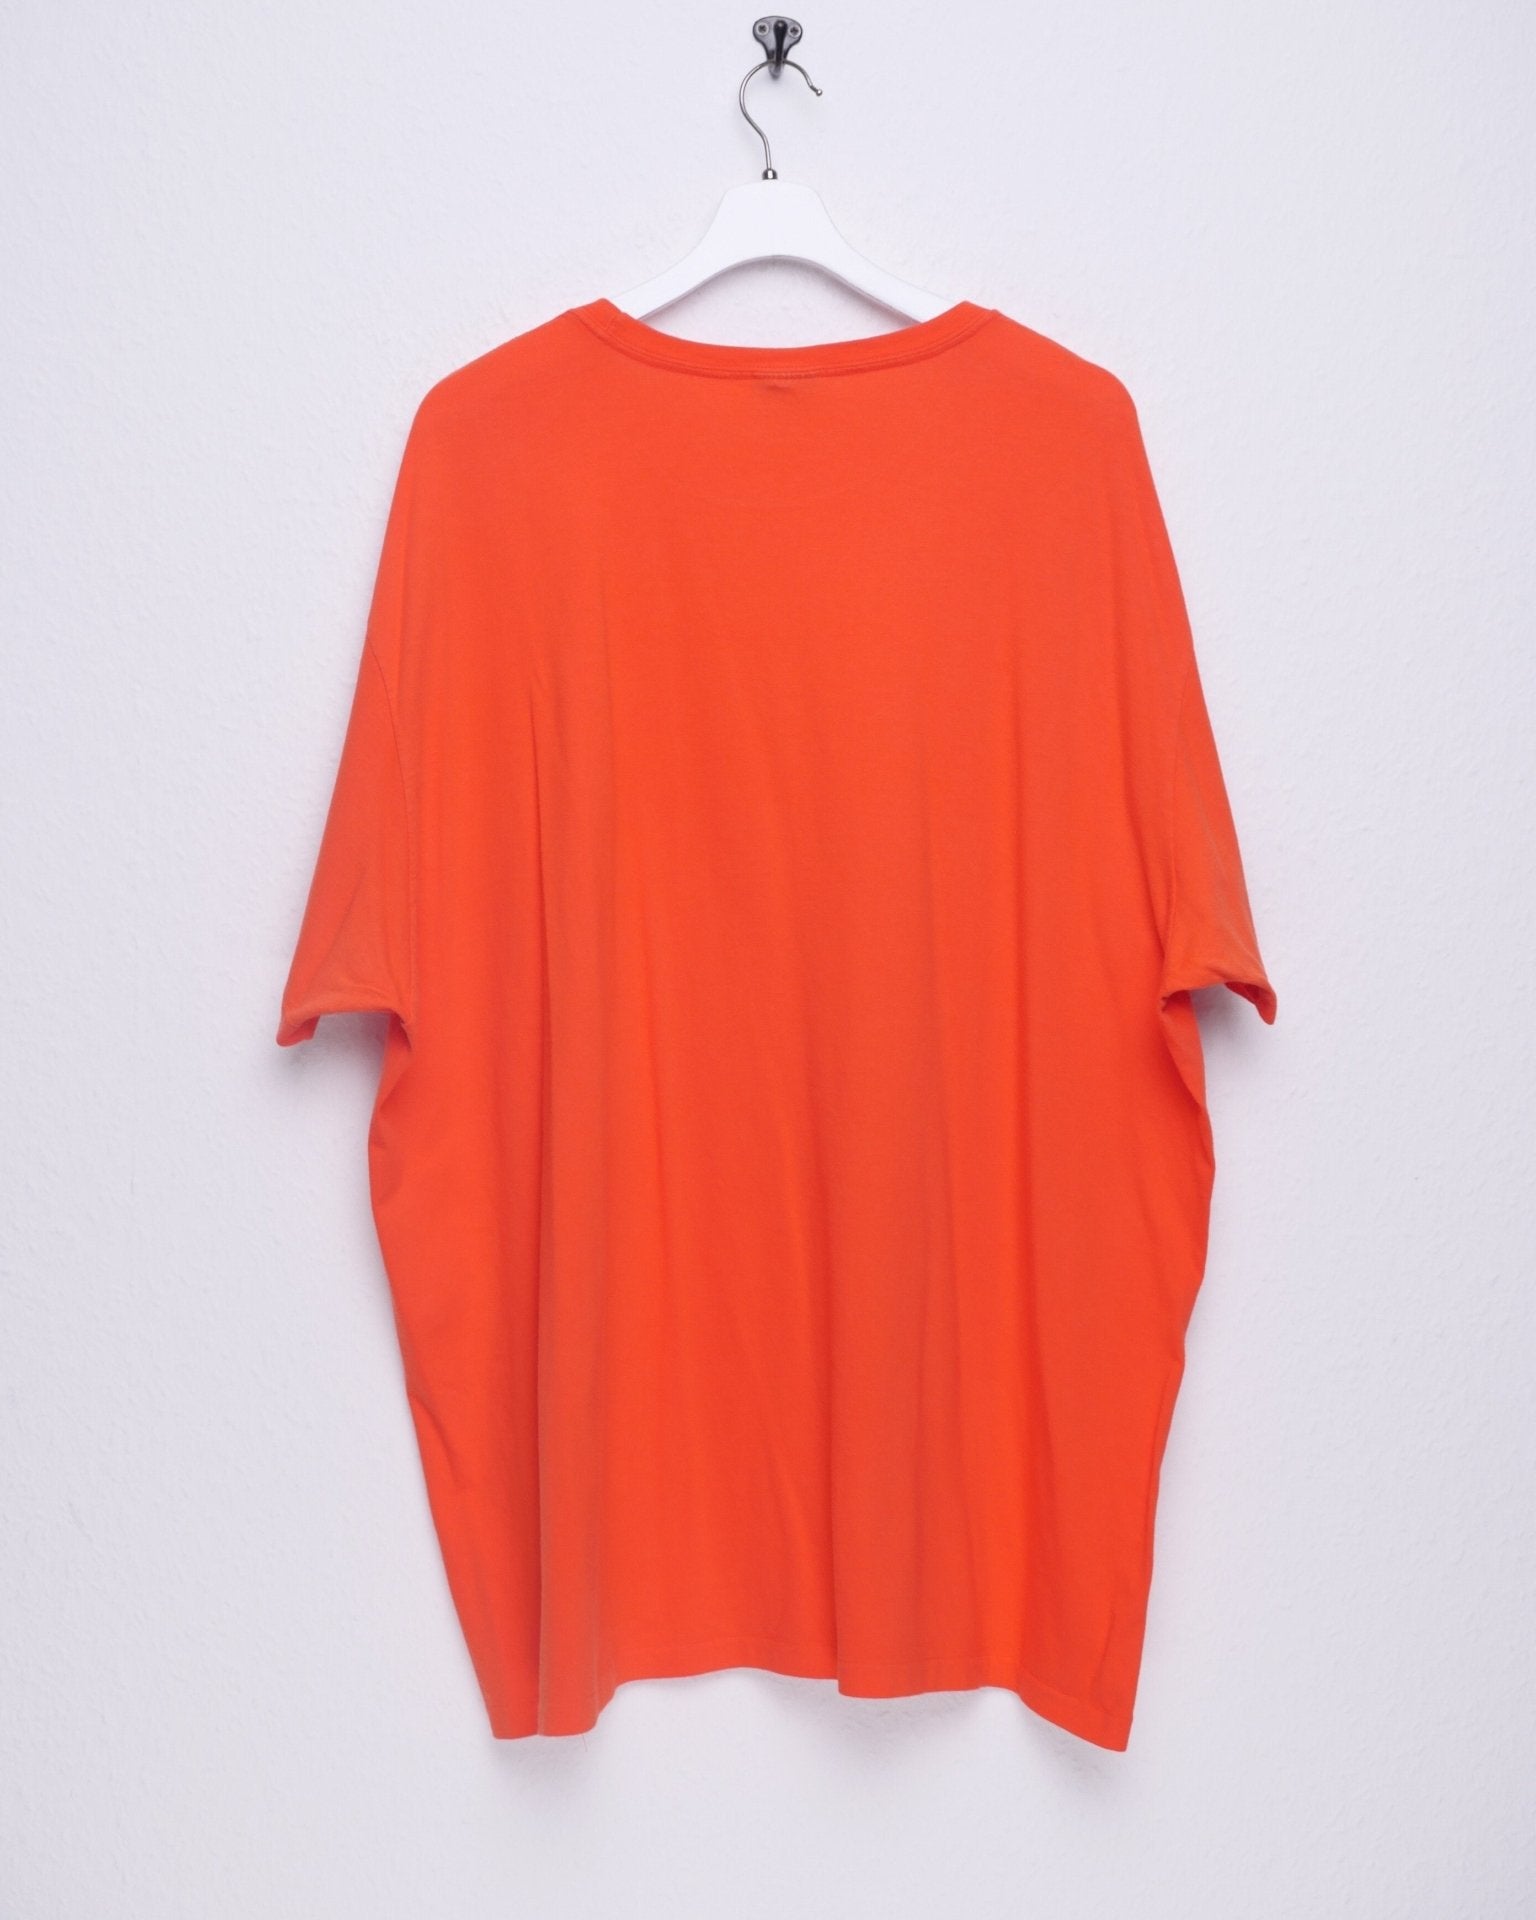 polo Ralph Lauren embroidered Logo orange Shirt - Peeces